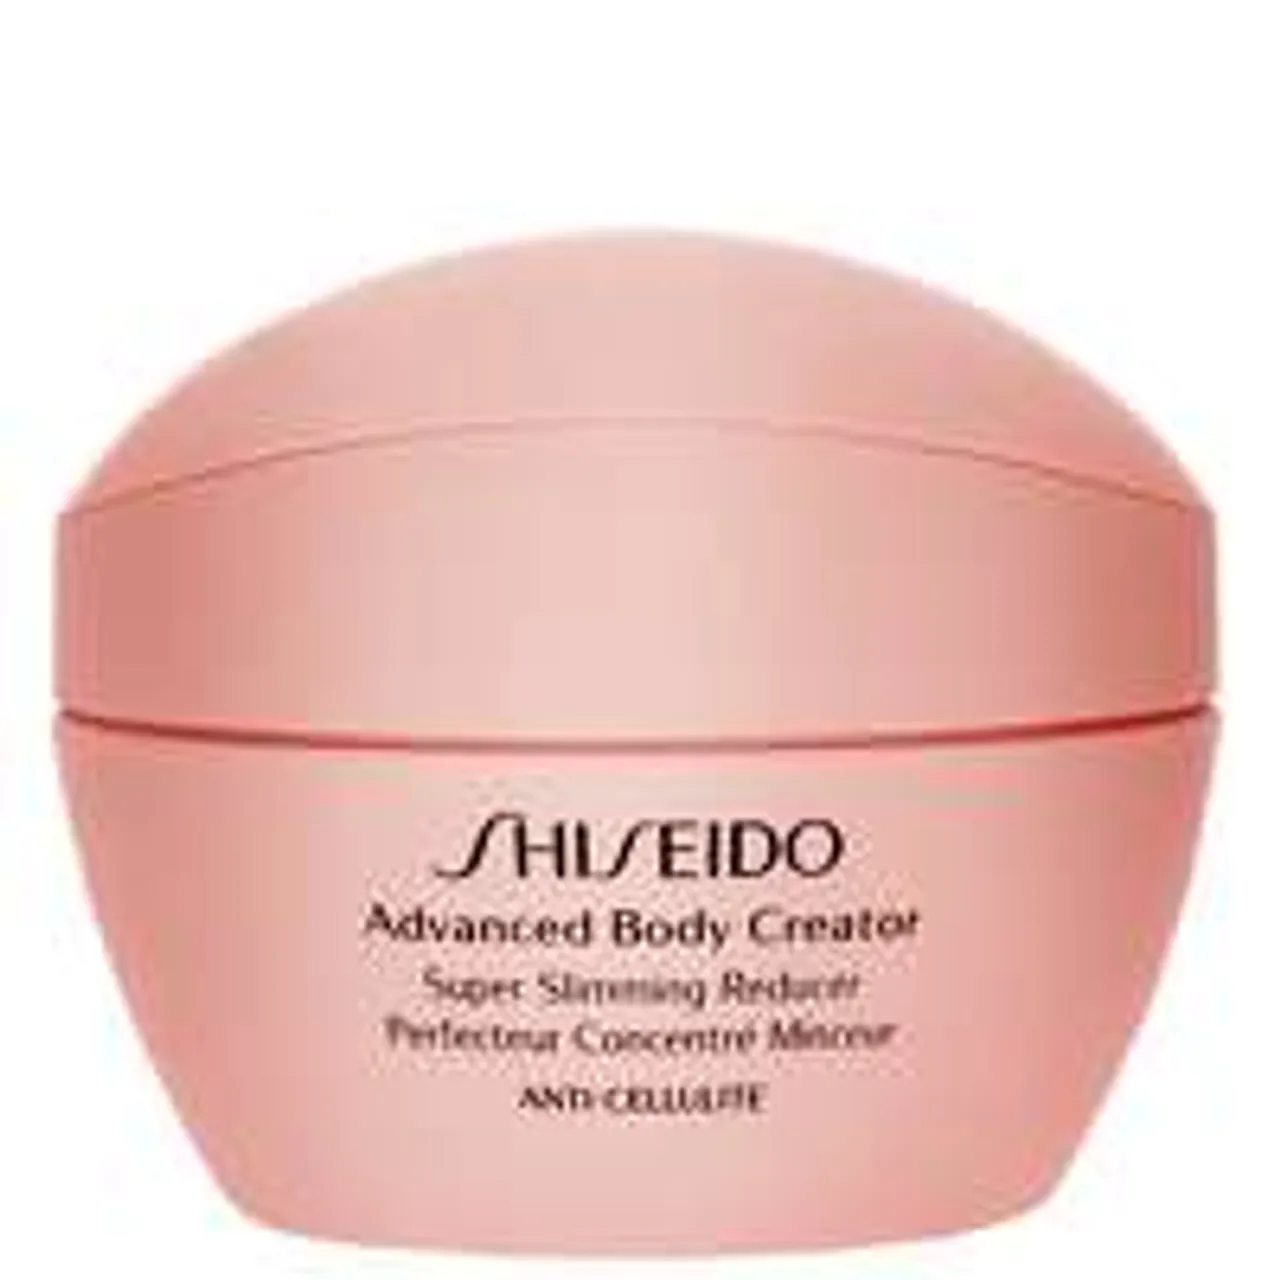 Shiseido Body Care Advanced Body Creator: Super Slimming Reducer 200ml / 6.9 oz.